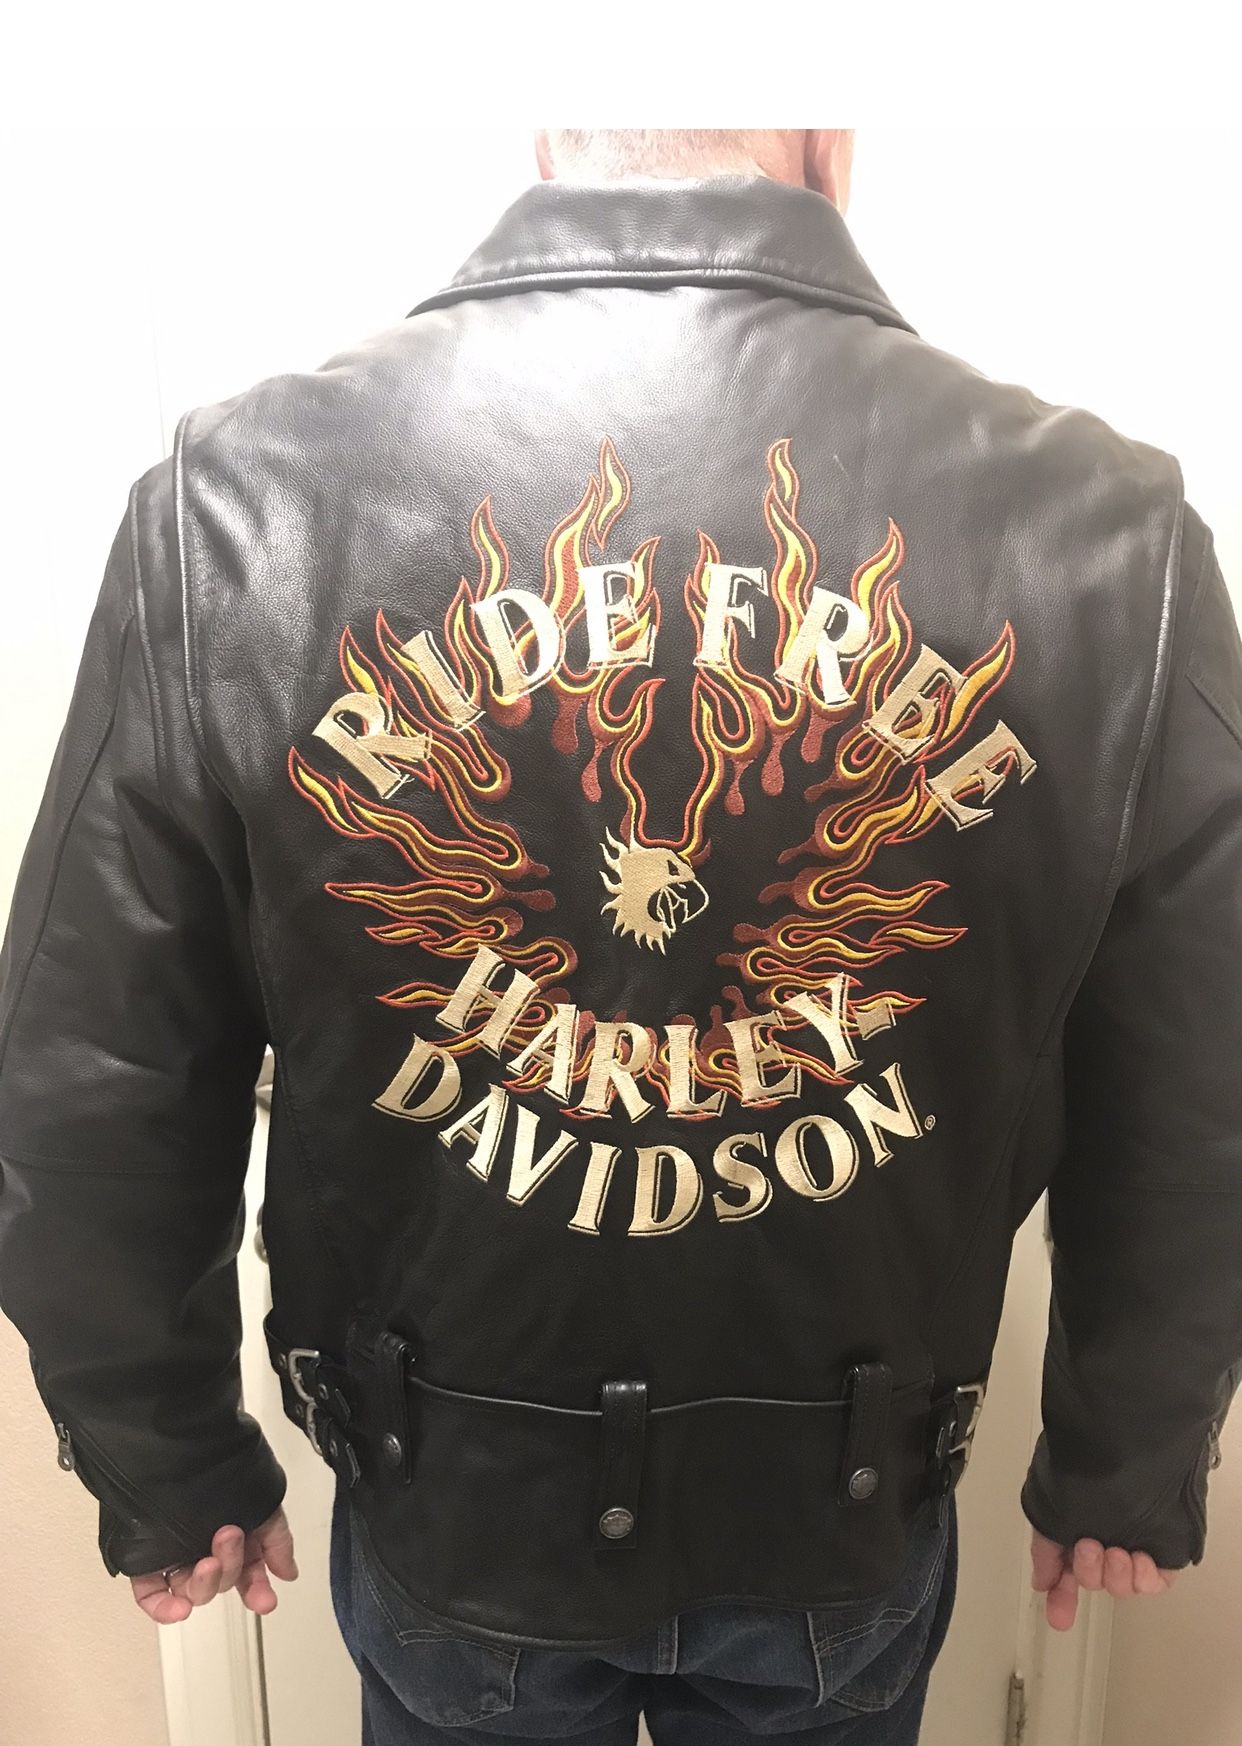 2XL Authentic Harley Davidson Jacket